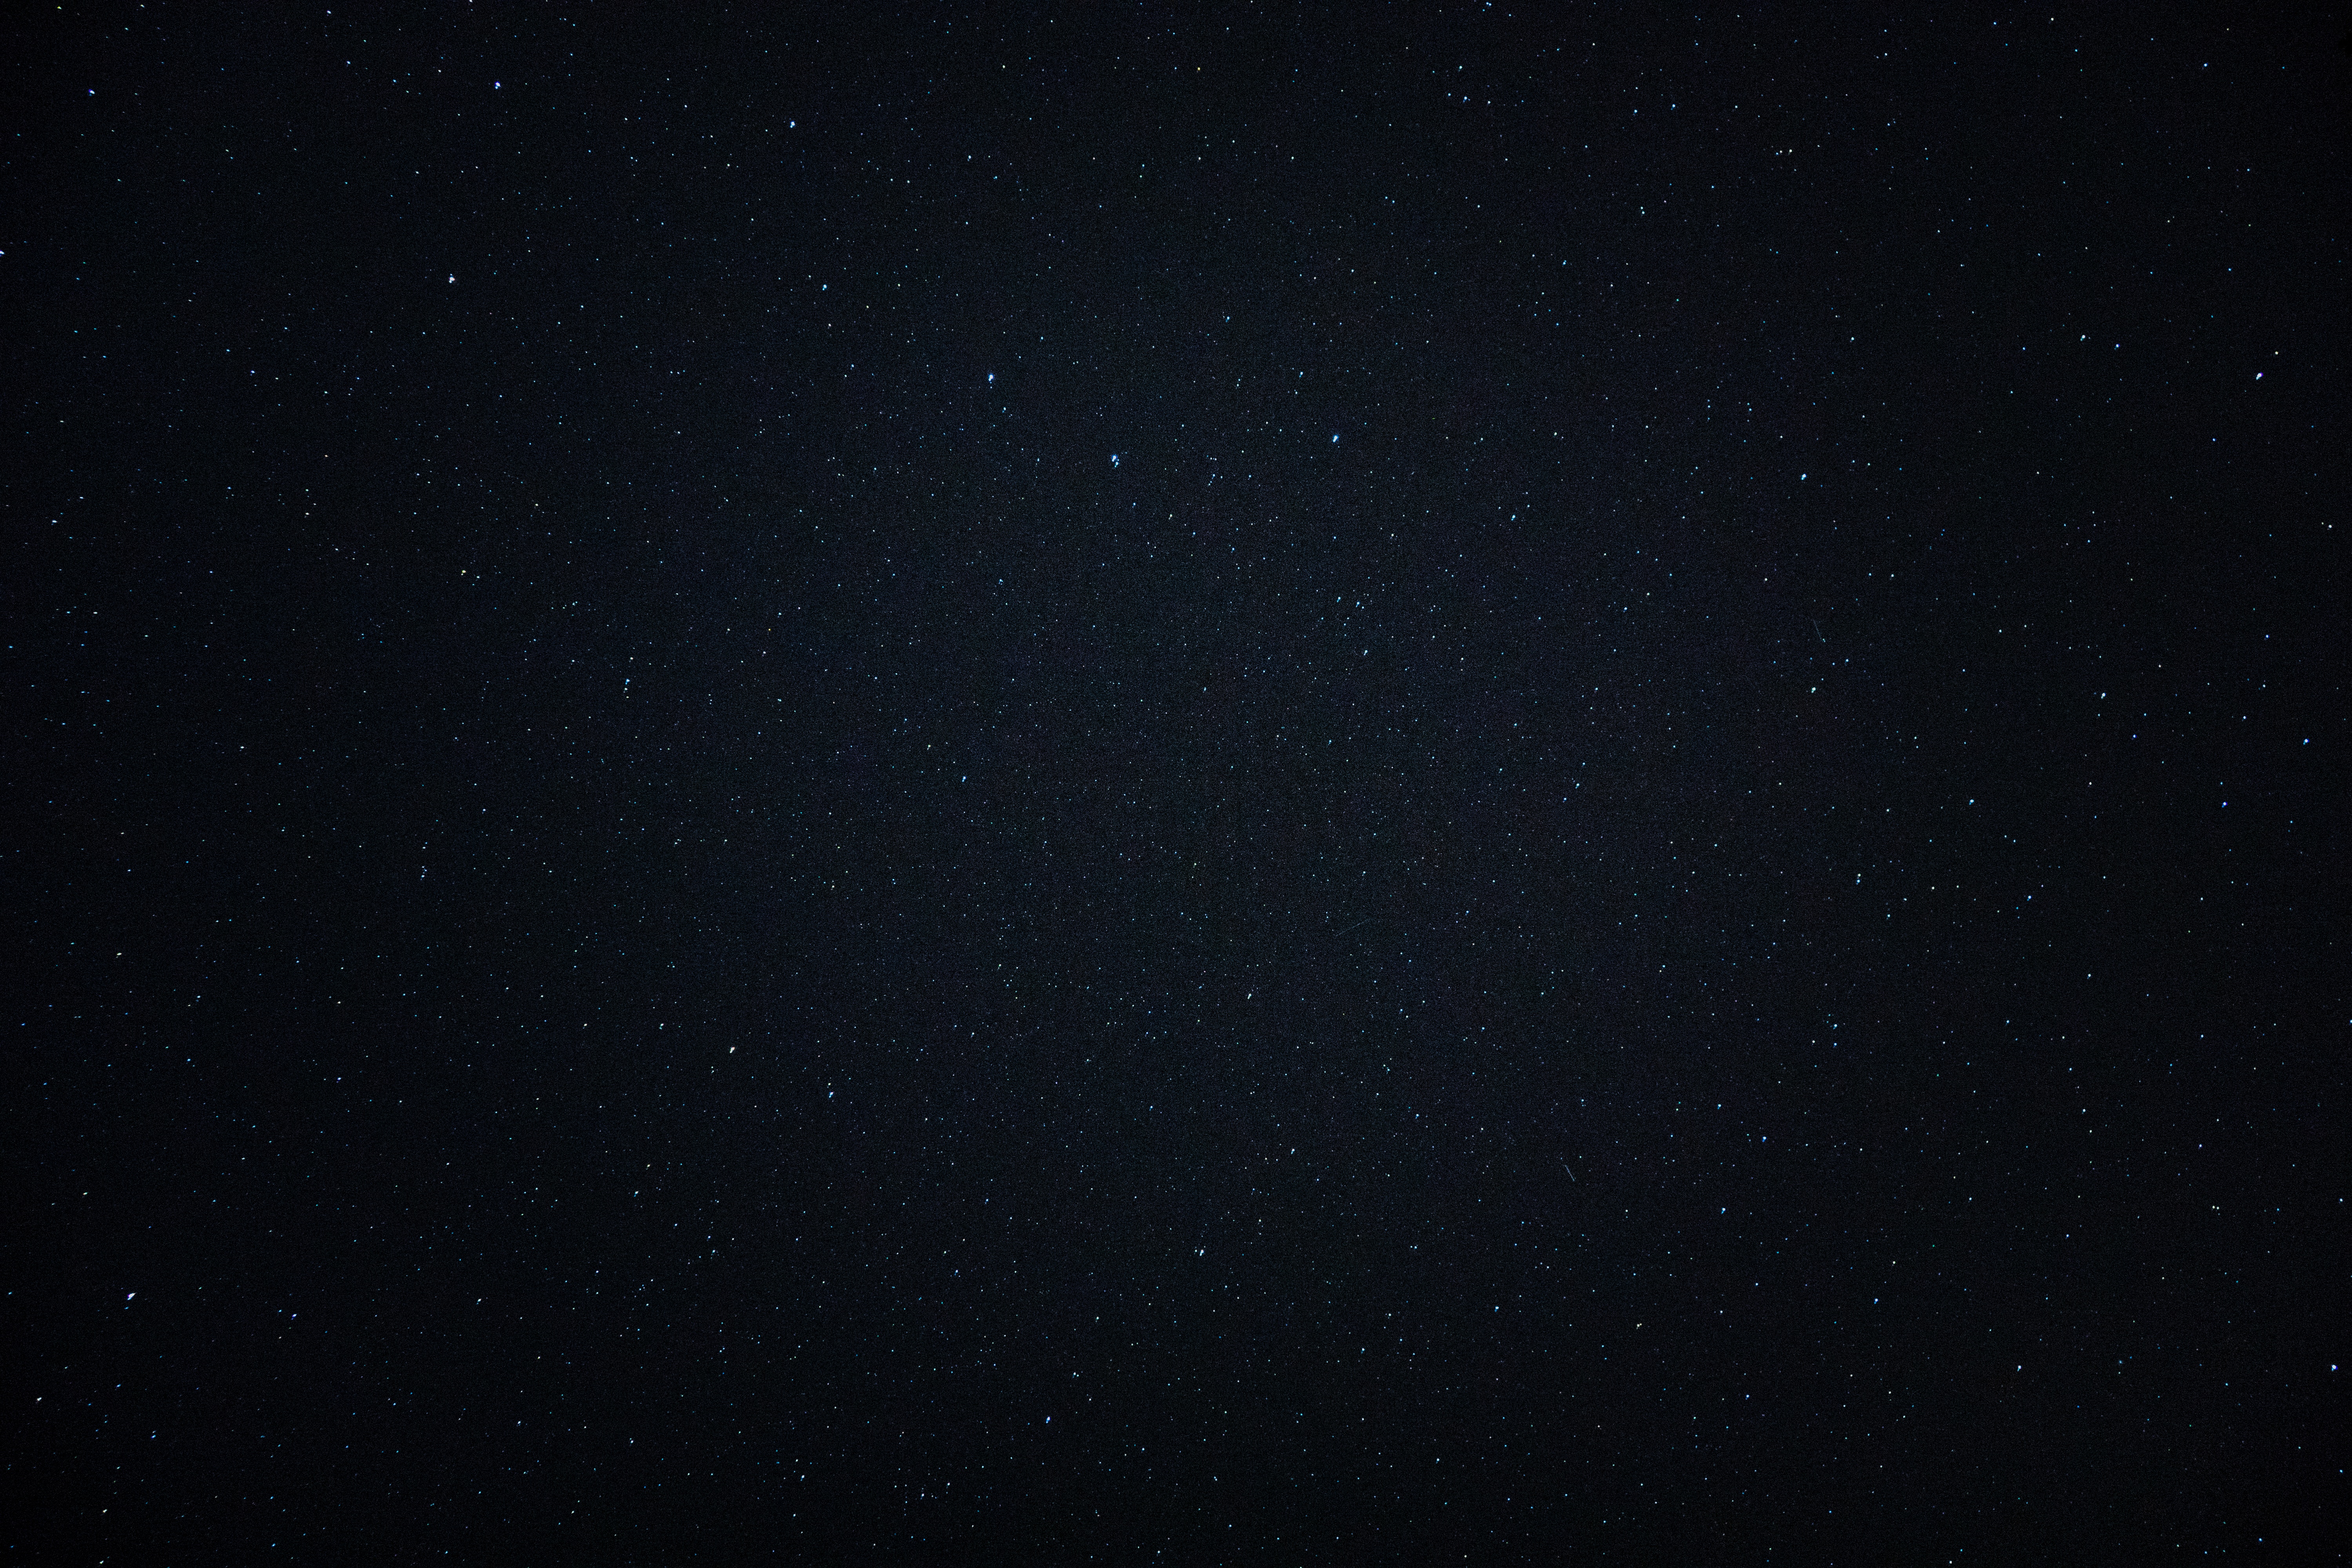 6000x4000 clean, dark, black, PNG image, star, simple, long exposure, night, sky, background, night sky, night time, blue Gallery HD Wallpaper